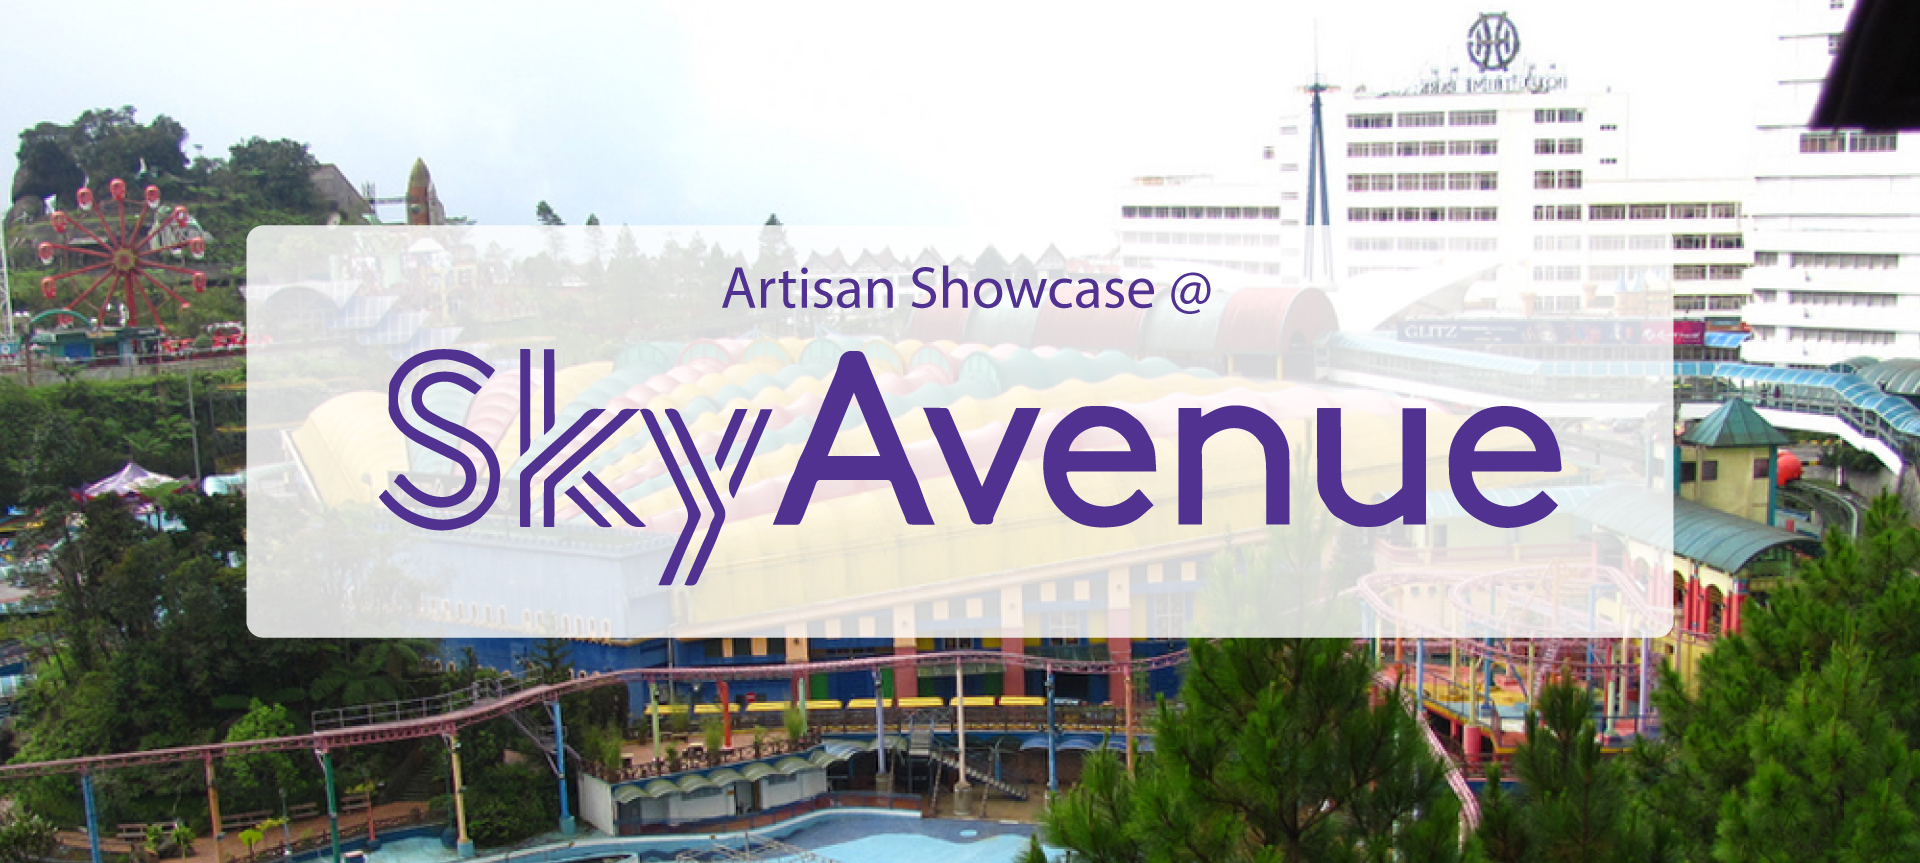 Artisan showcase @ Sky Avenue, Genting